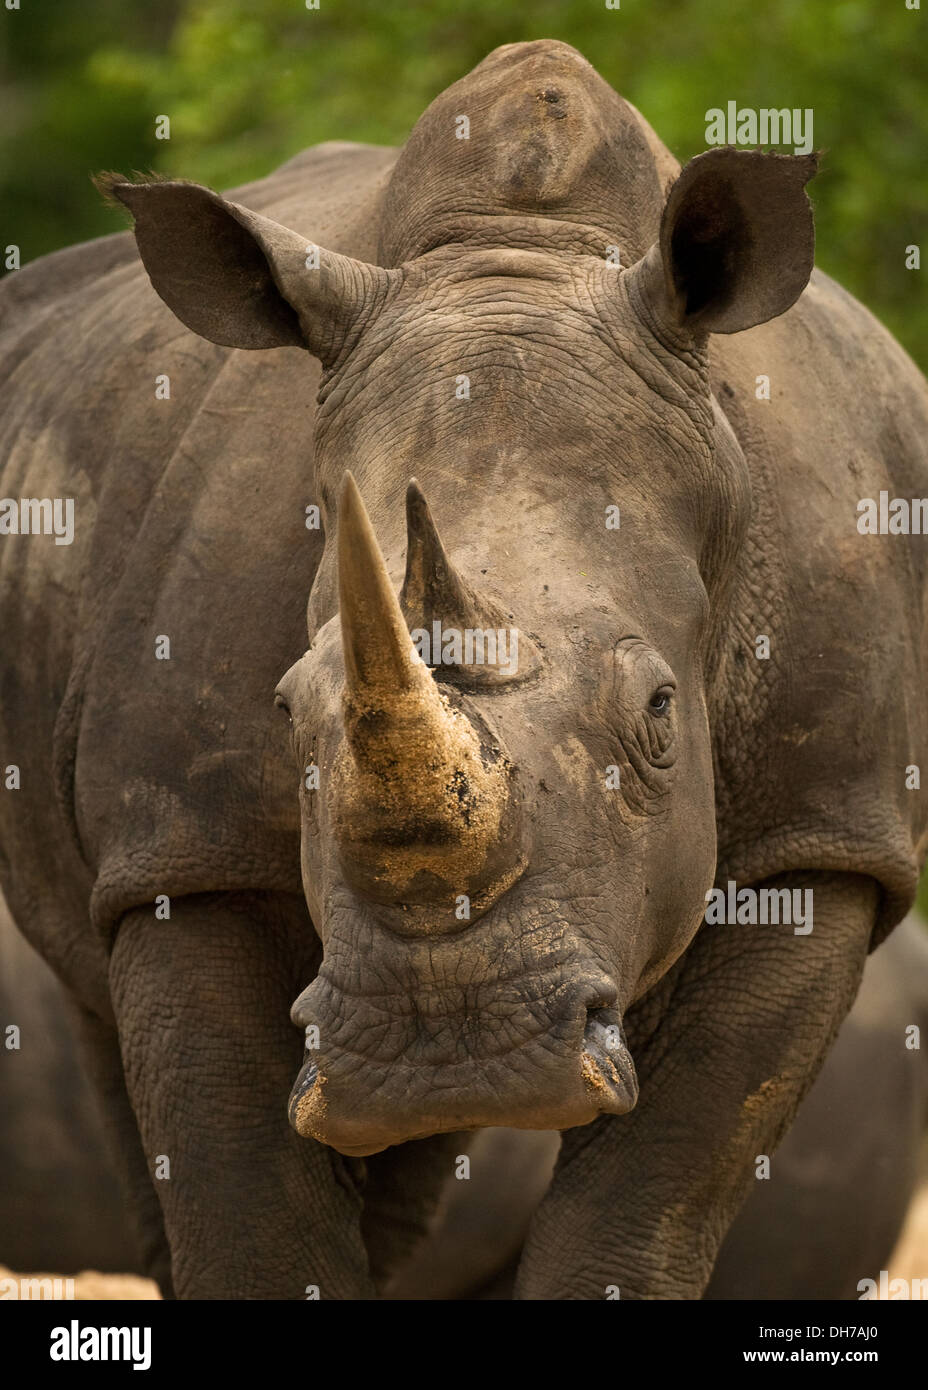 Rhino, Weißes Nashorn, Rhinozeros, Big 5, Stockfoto